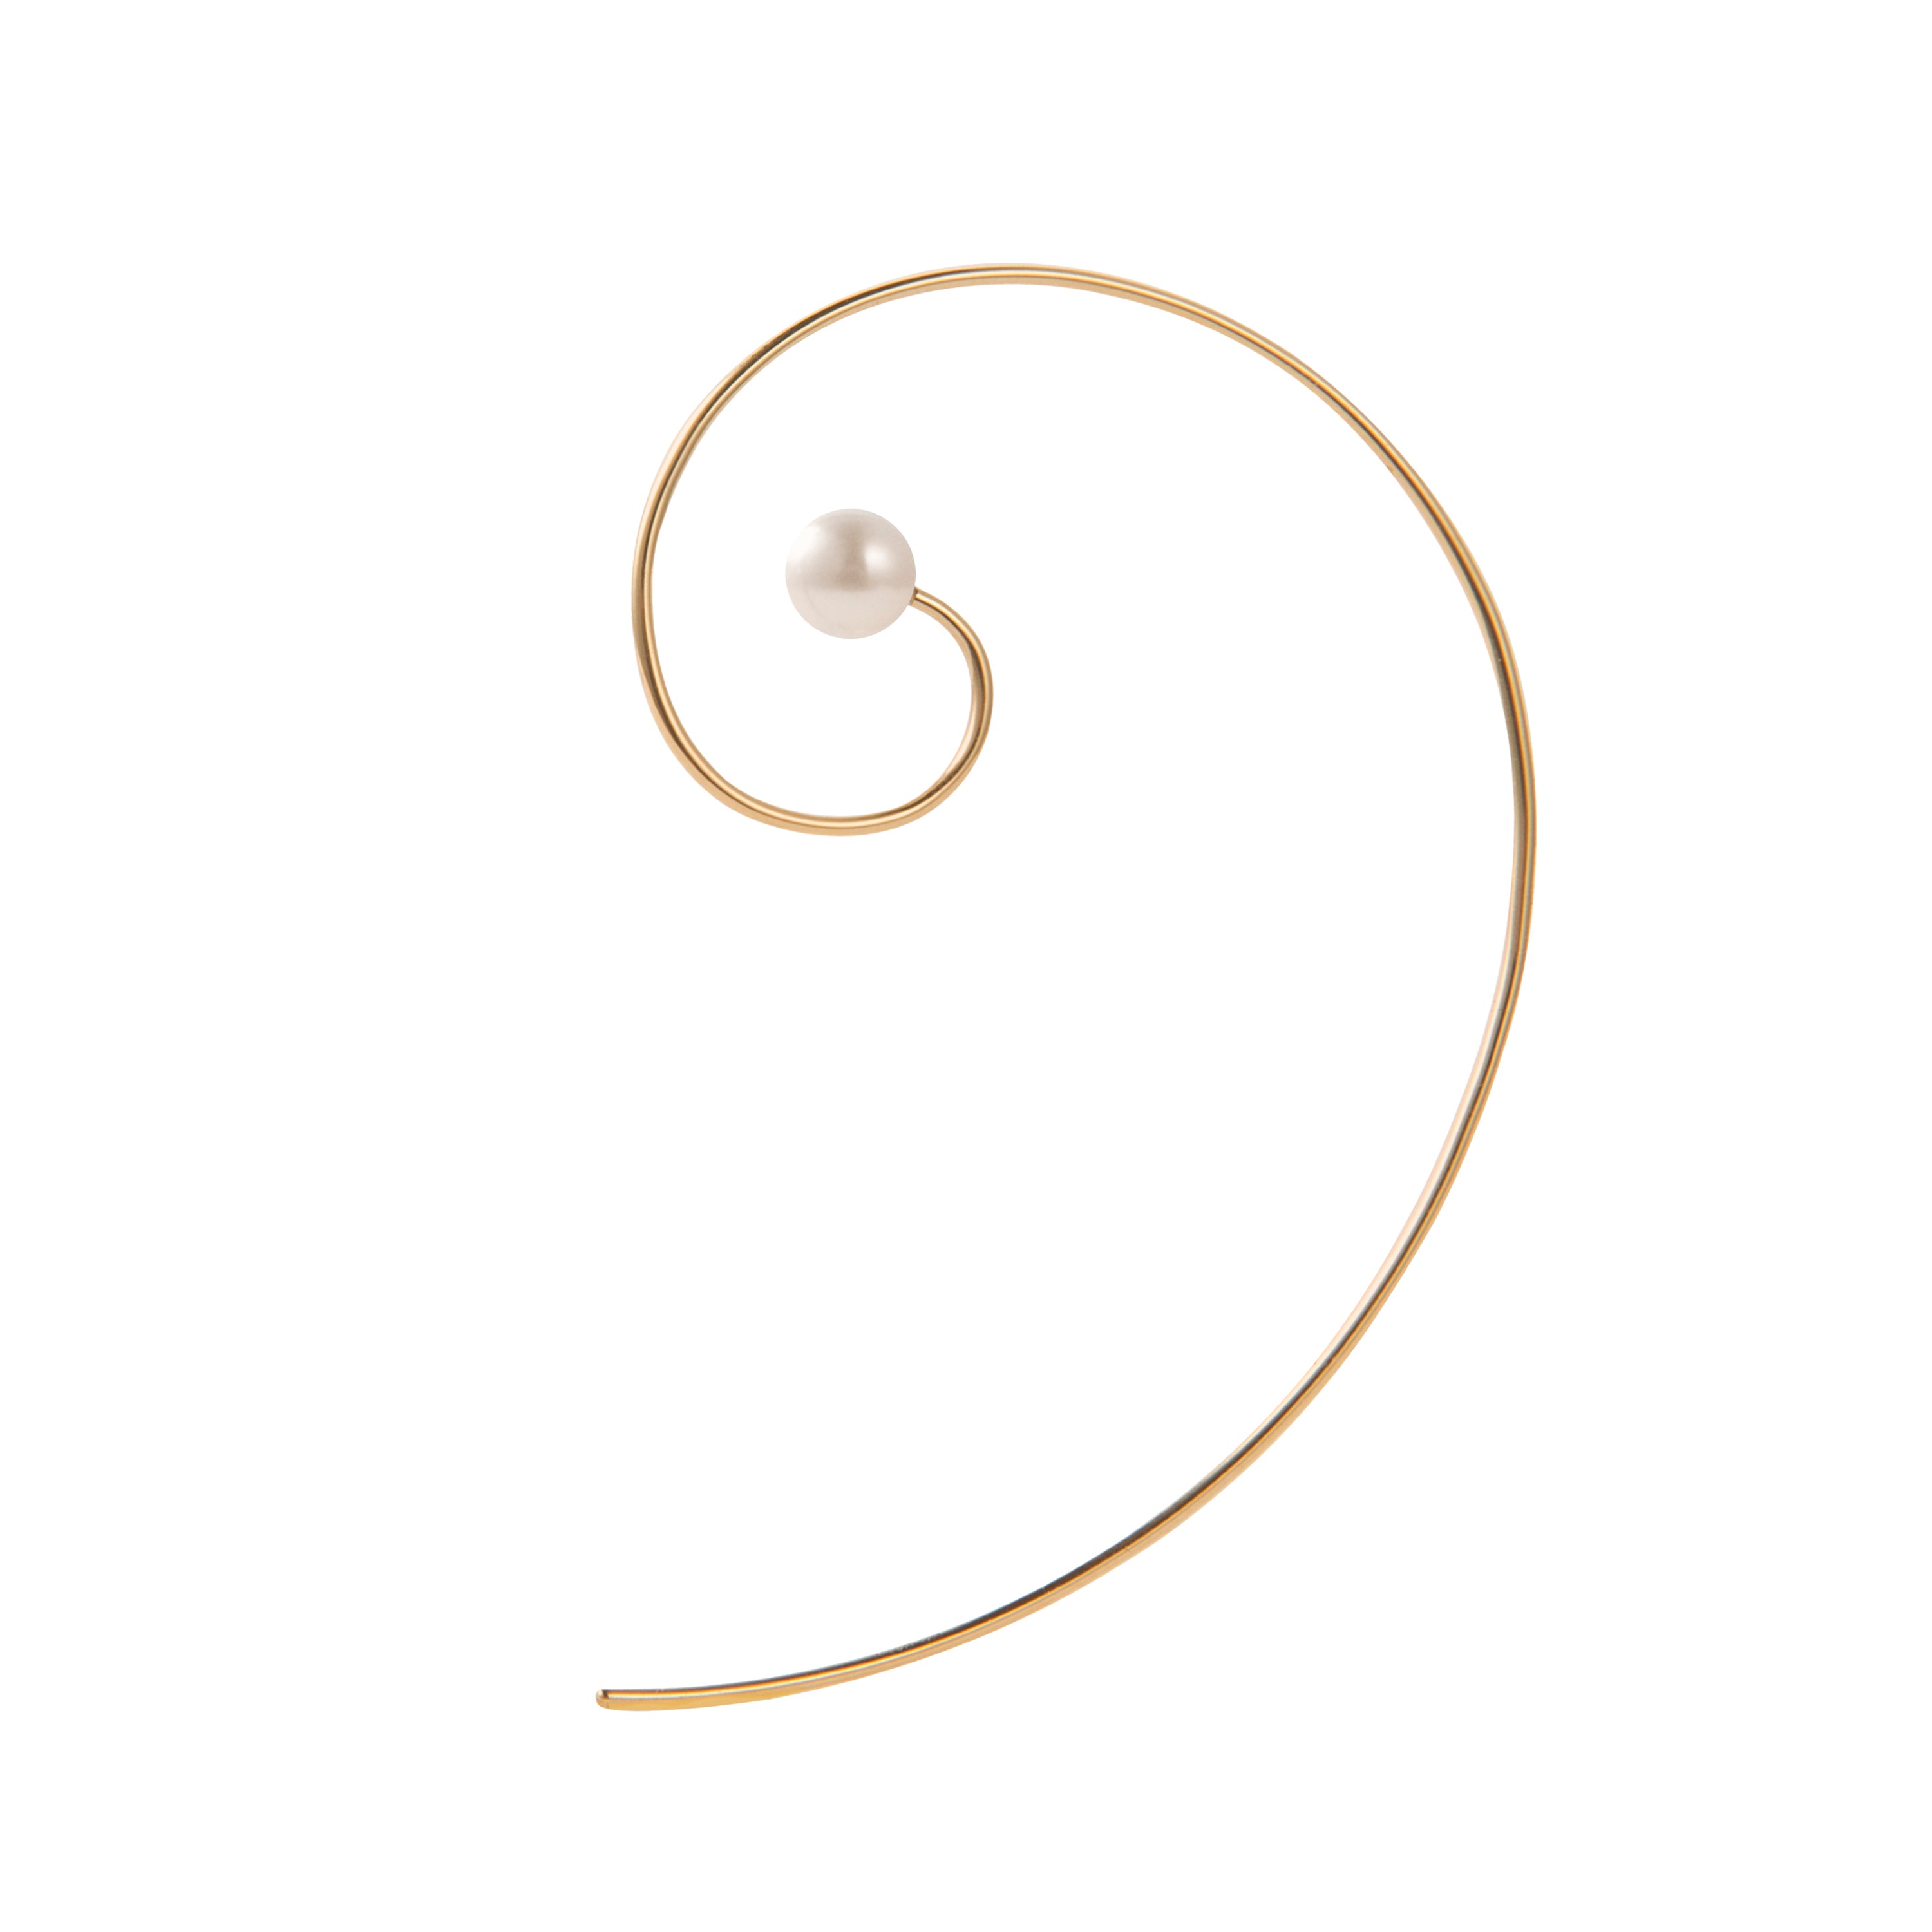 The Golden Ratio Earring – YIN Fine Jewelry